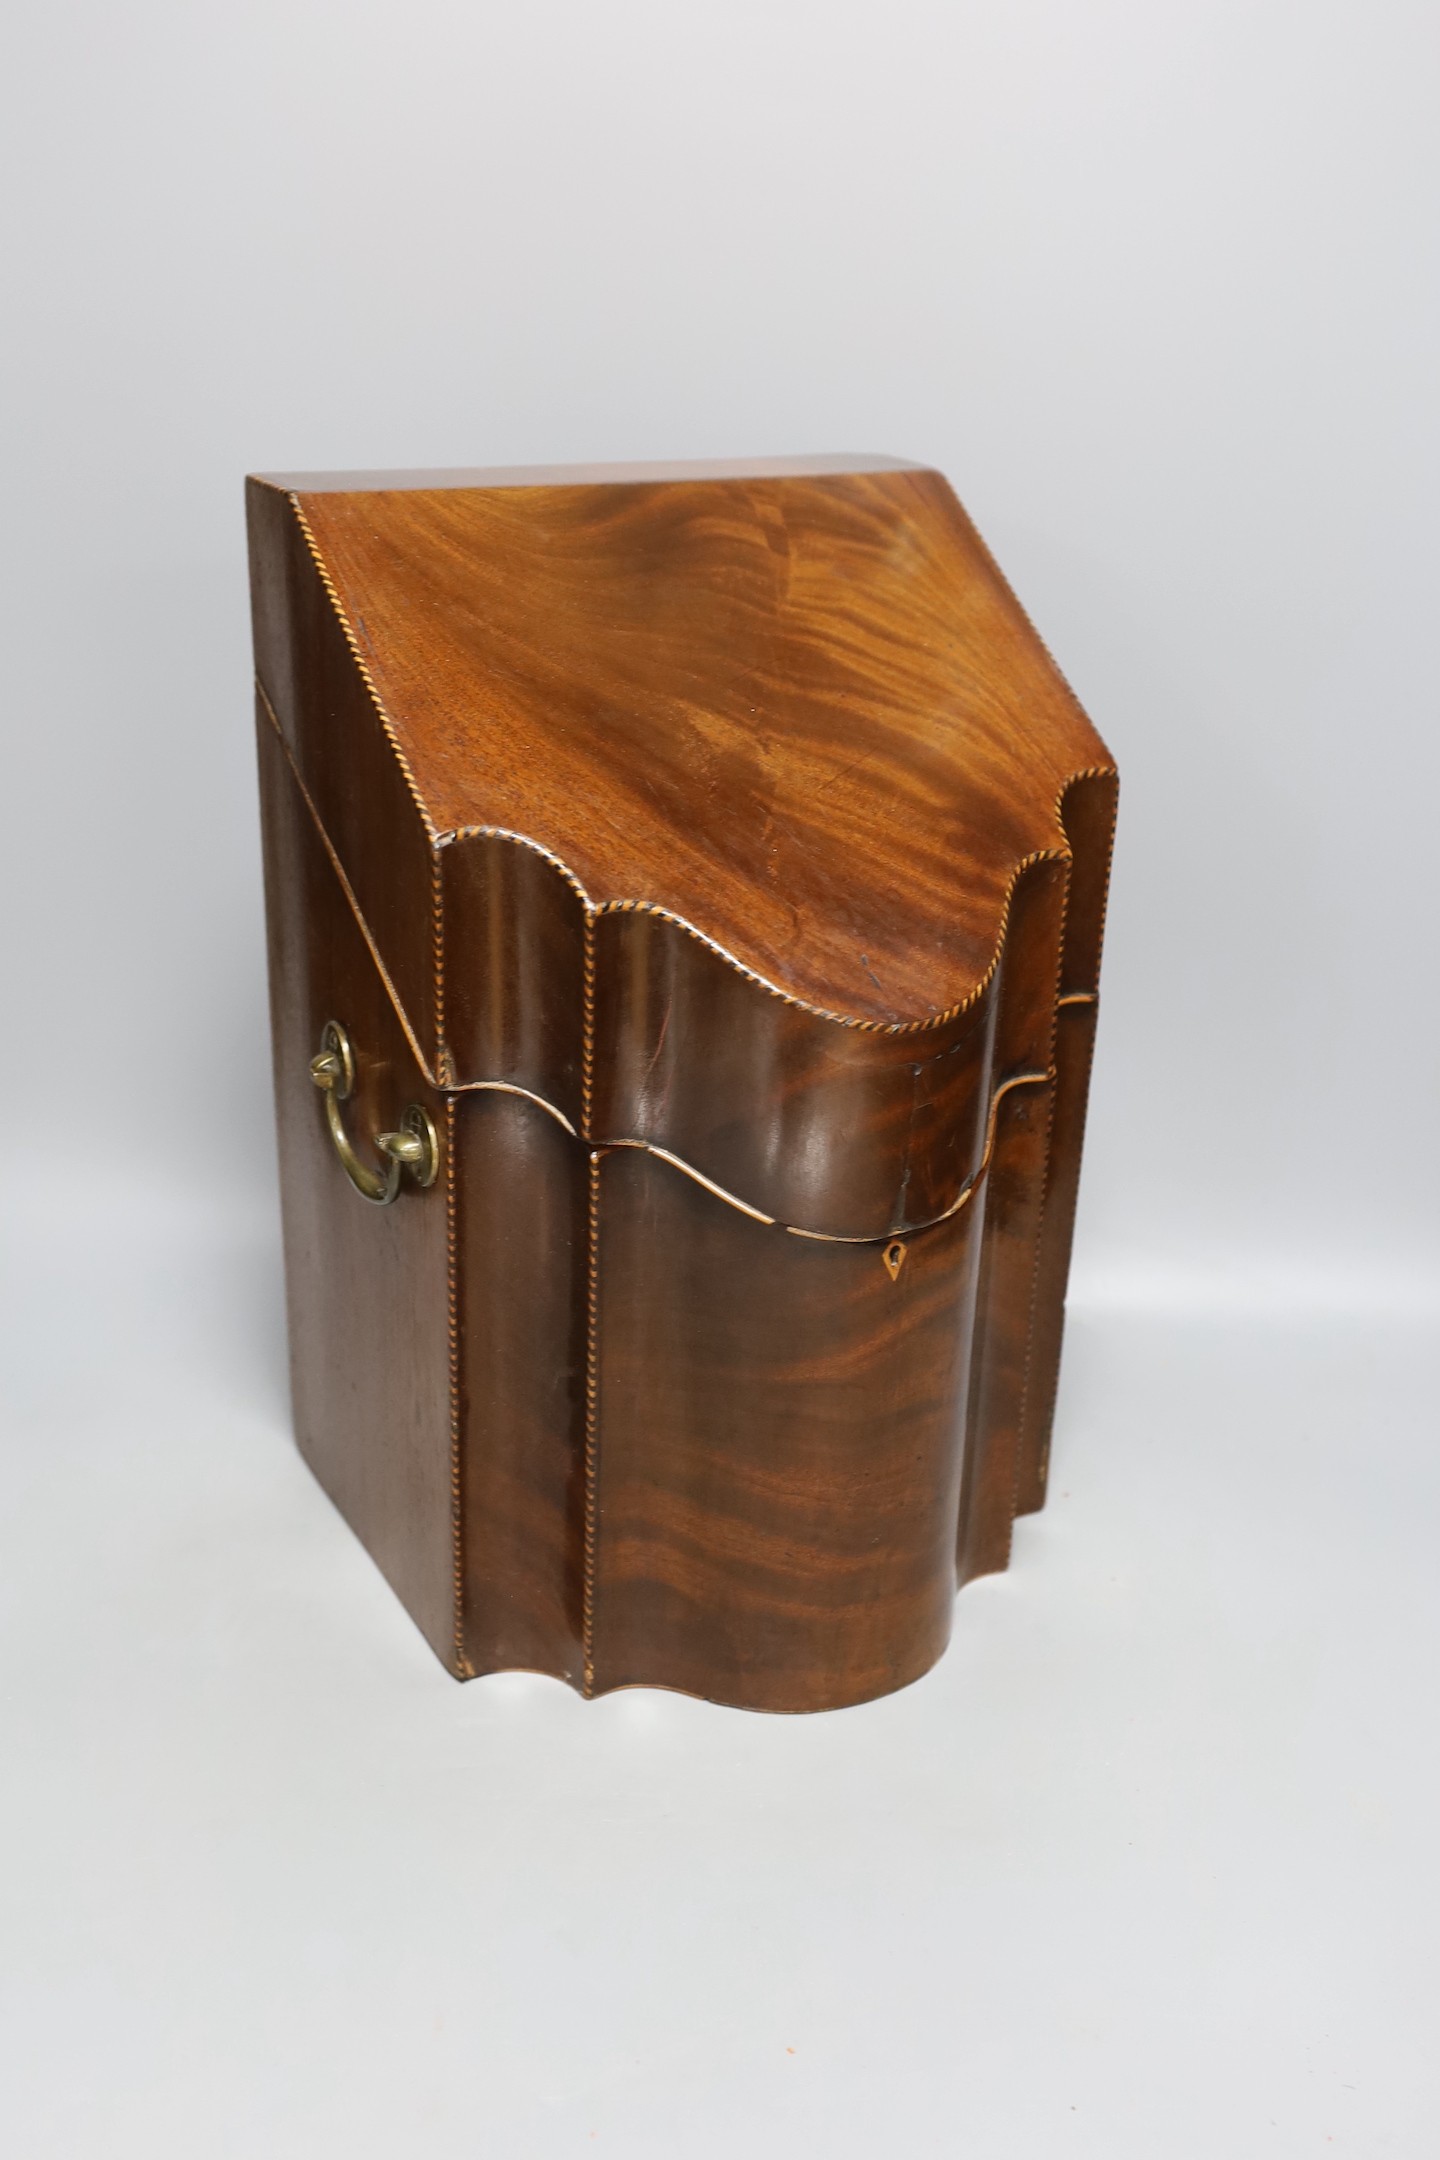 A George III mahogany knife box, original interior fittings loose. 36cm